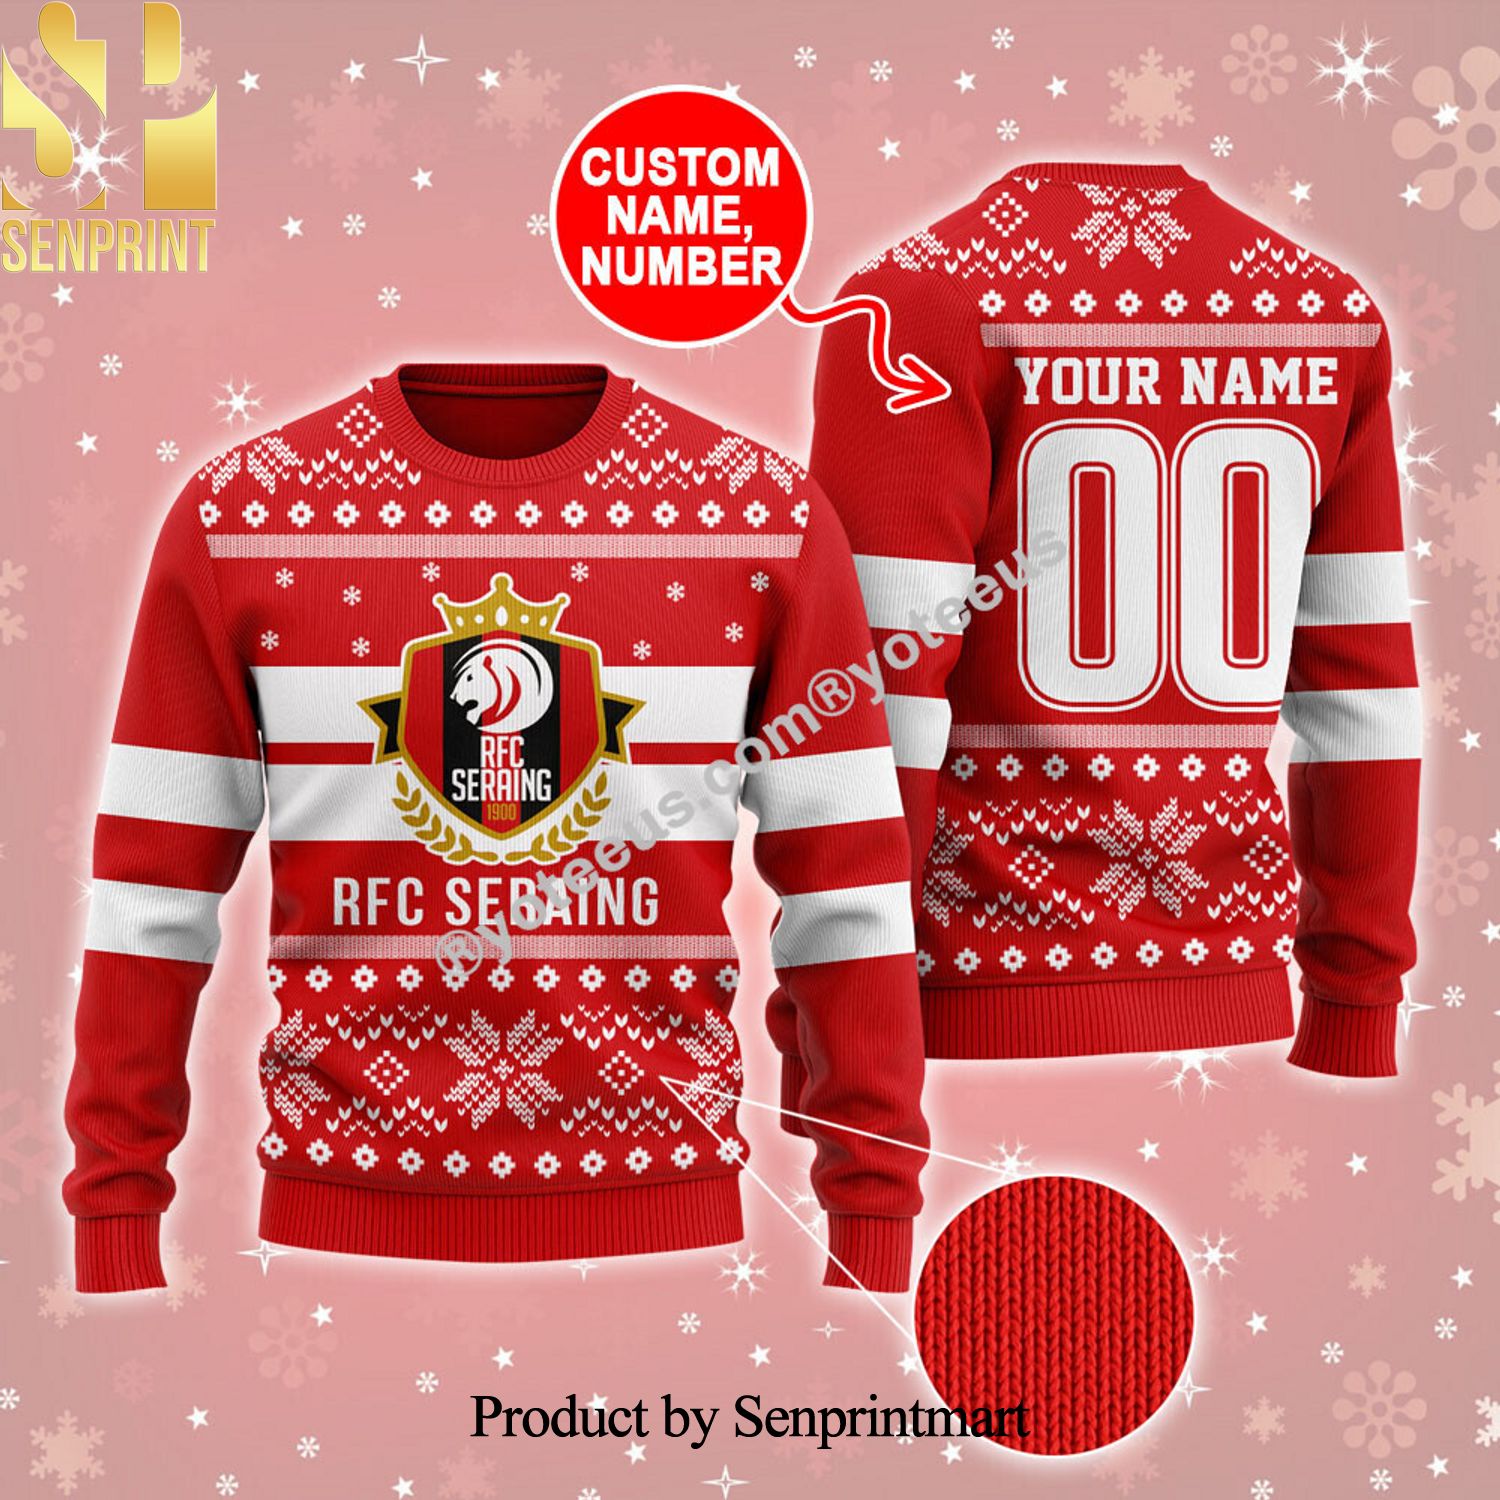 RFC Seraing 3D Printed Ugly Christmas Sweater